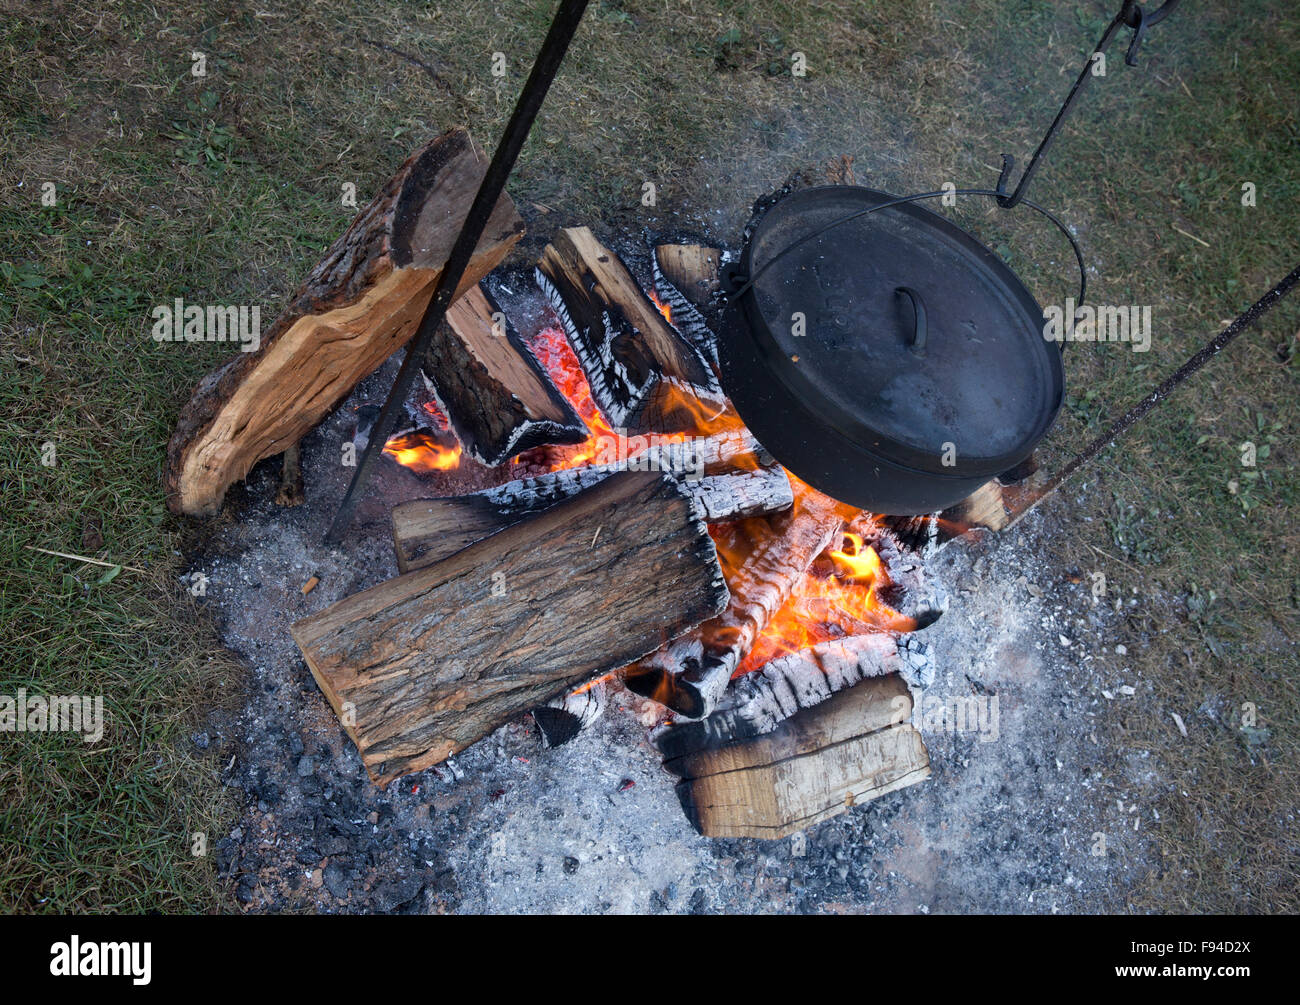 https://c8.alamy.com/comp/F94D2X/cast-iron-dutch-oven-hanging-over-a-campfire-to-cook-food-F94D2X.jpg